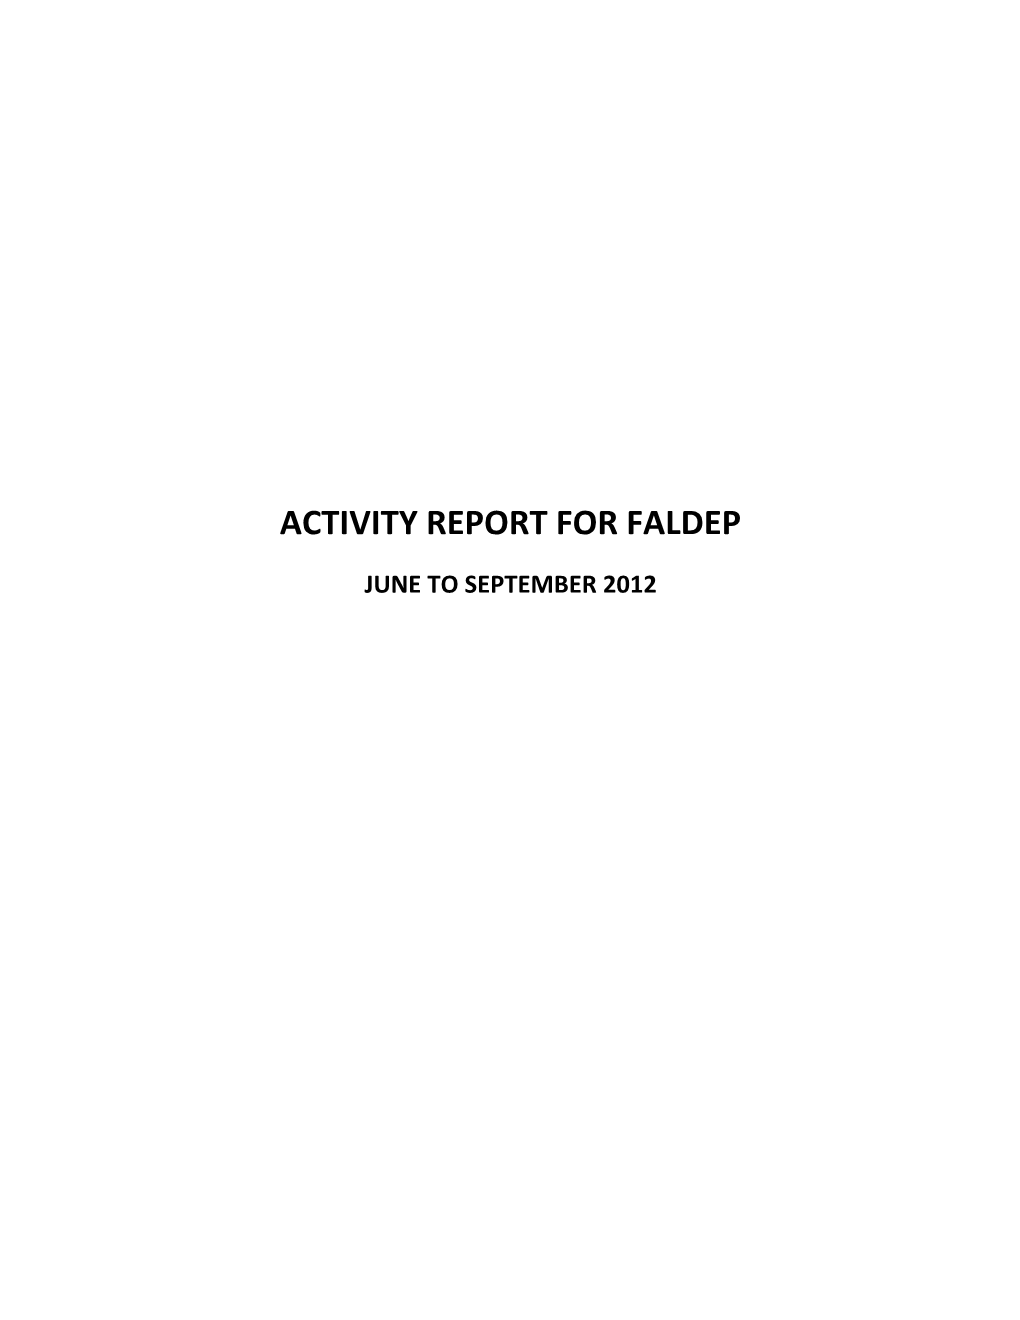 Activity Report for Faldep